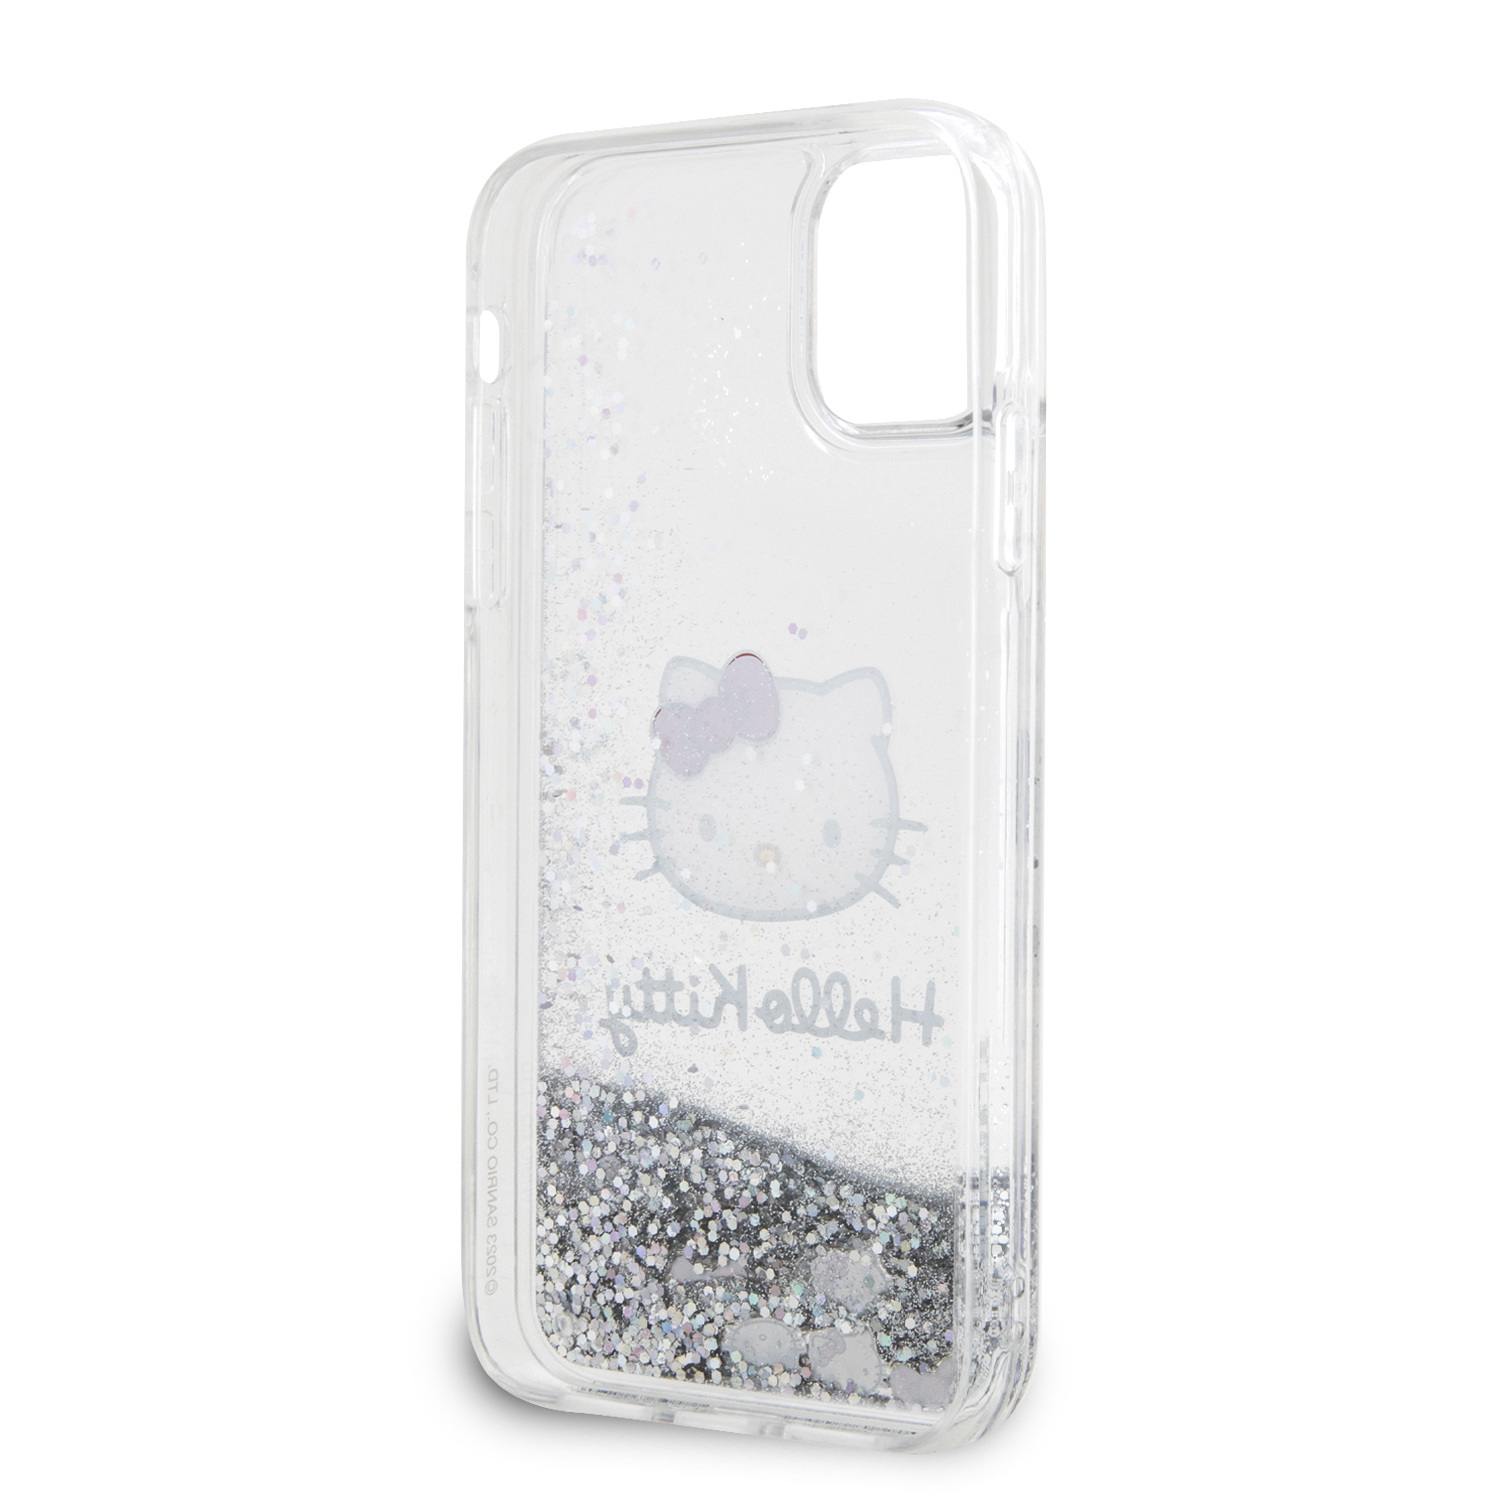 Hello Kitty Liquid Glitter Electroplating Head Logo Zadní Kryt pro iPhone 11 Transparent